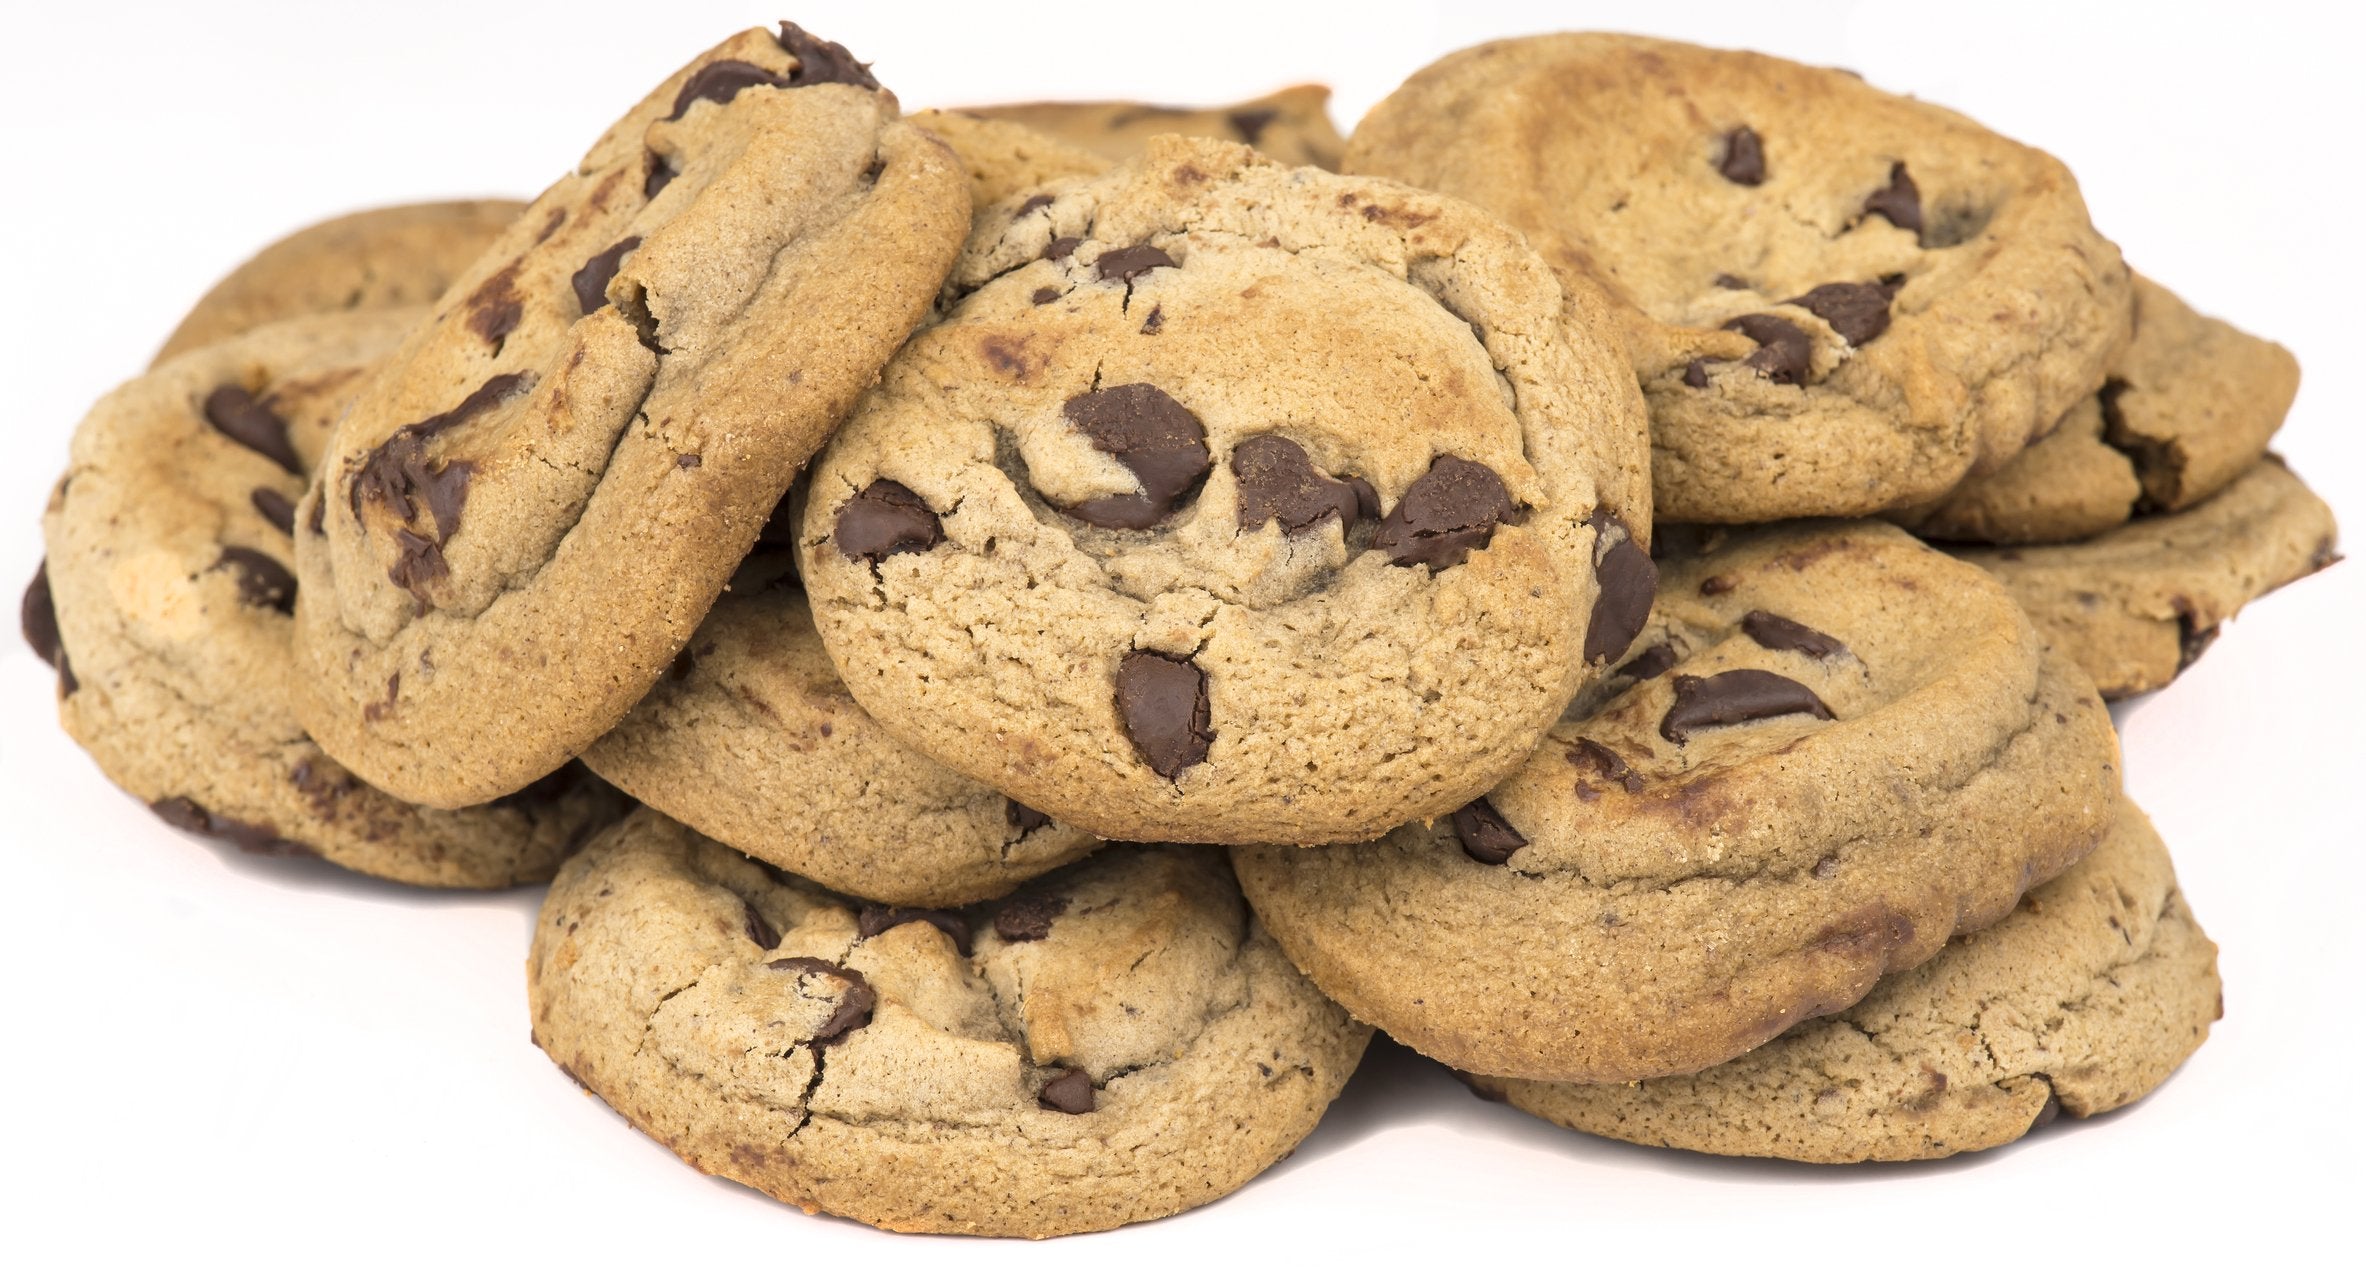 Gluten-free chocolate chip cookies